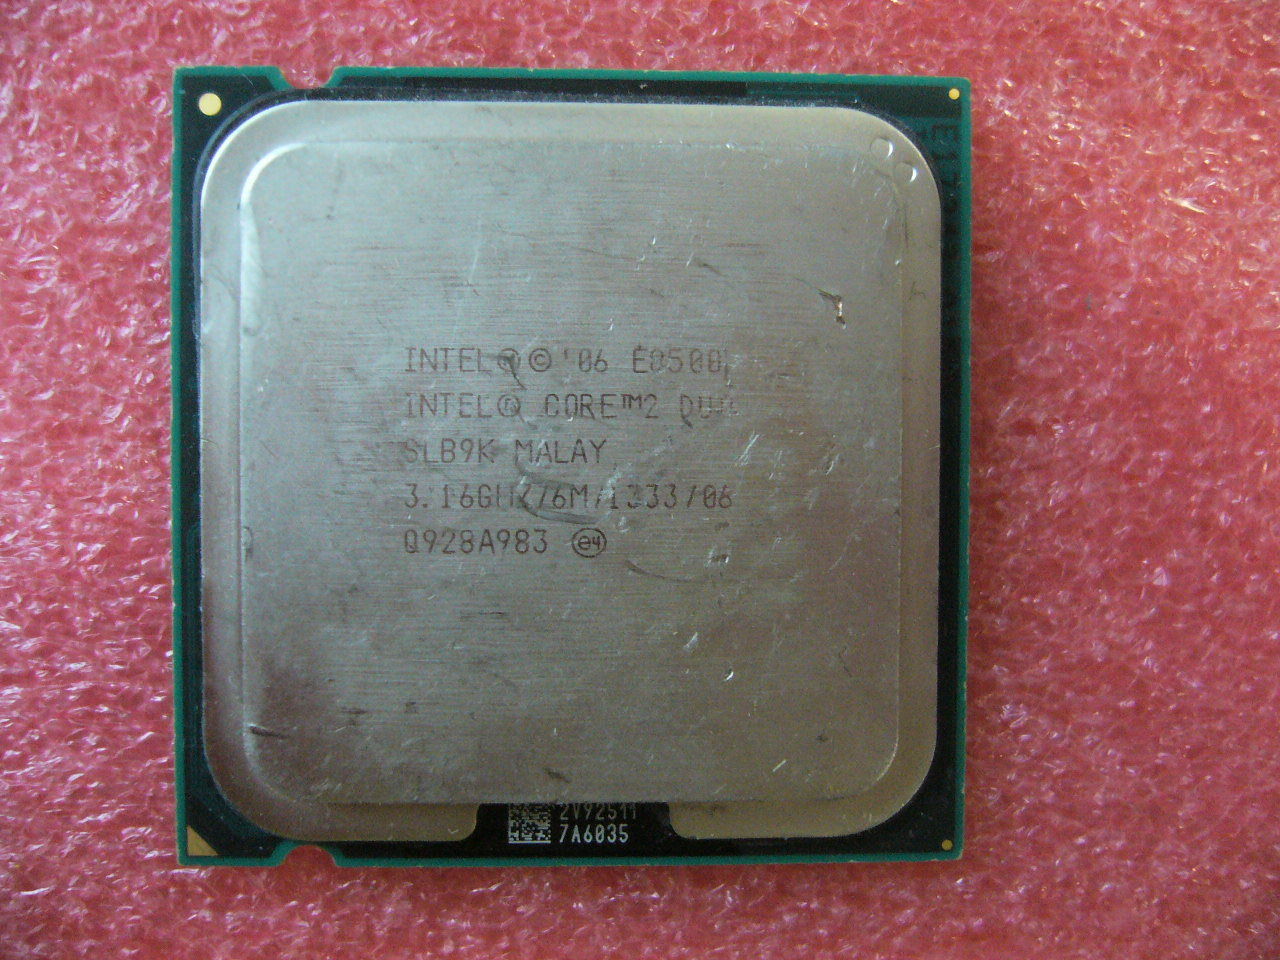 QTY 1x INTEL Core 2 Duo E8500 CPU 3.16GHz 6MB/1333Mhz LGA775 SLB9K SLAPK